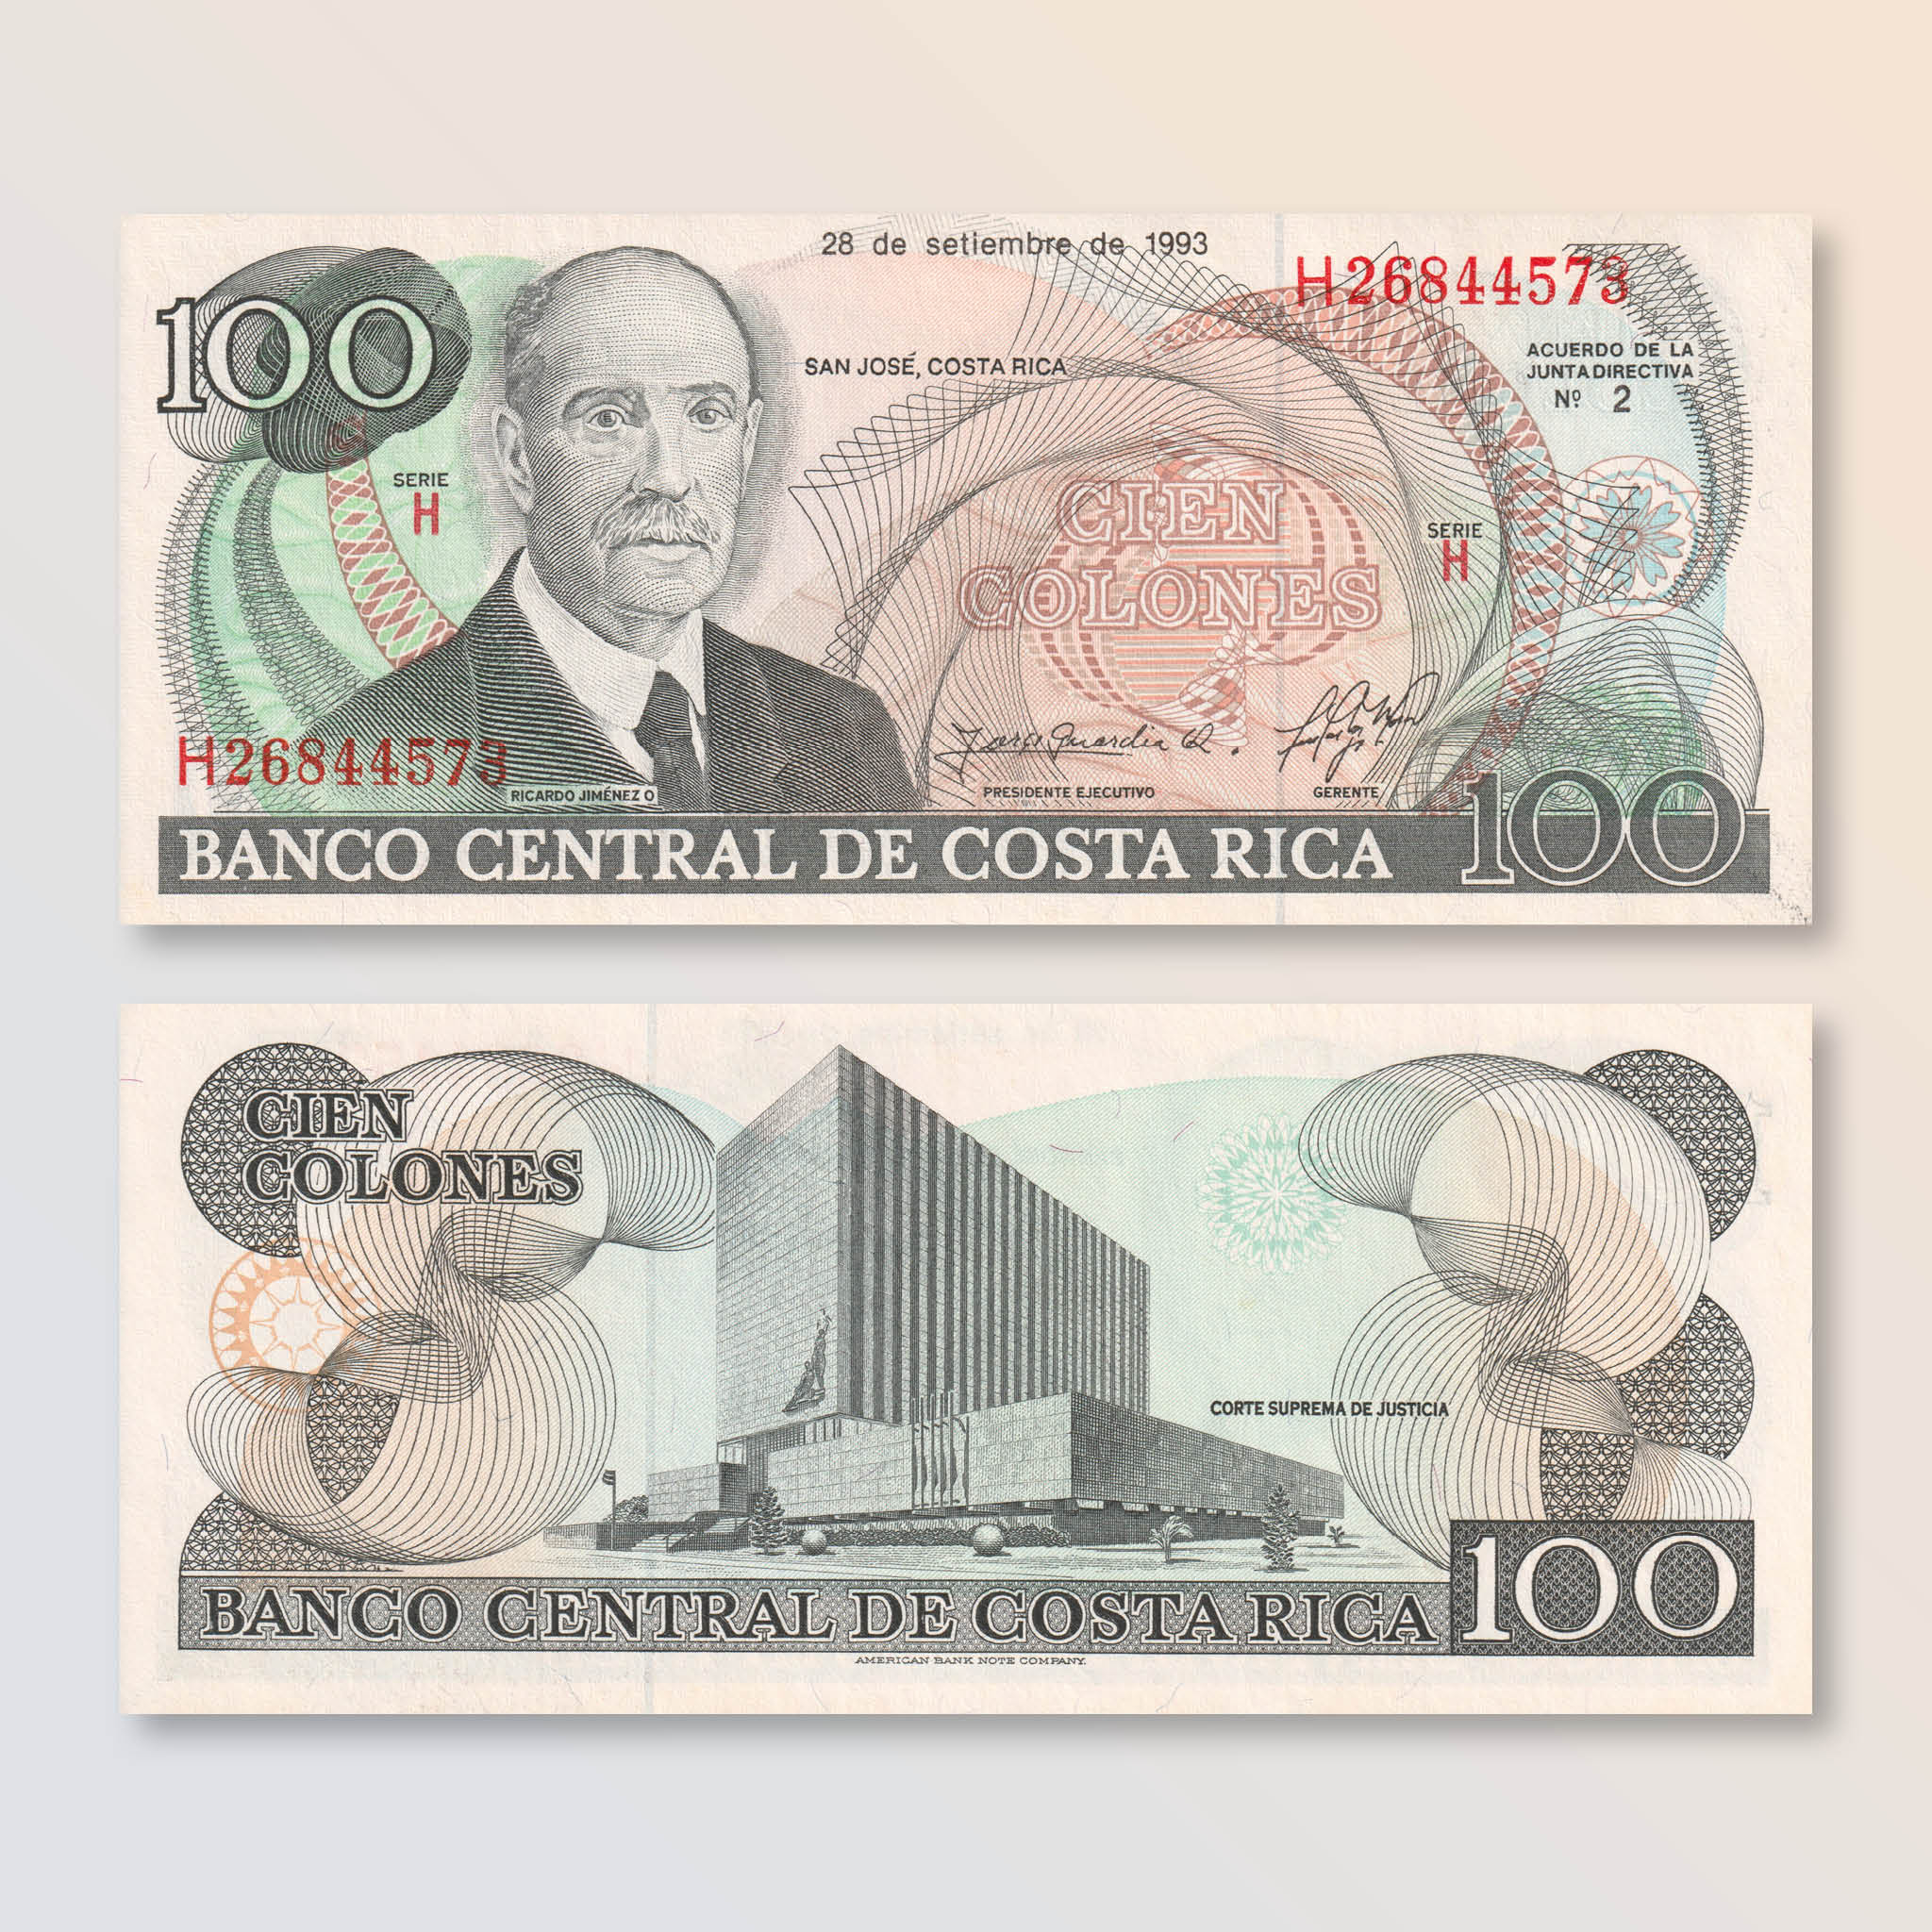 Costa Rica 100 Colones, 1993, B540a, P261a, UNC - Robert's World Money - World Banknotes